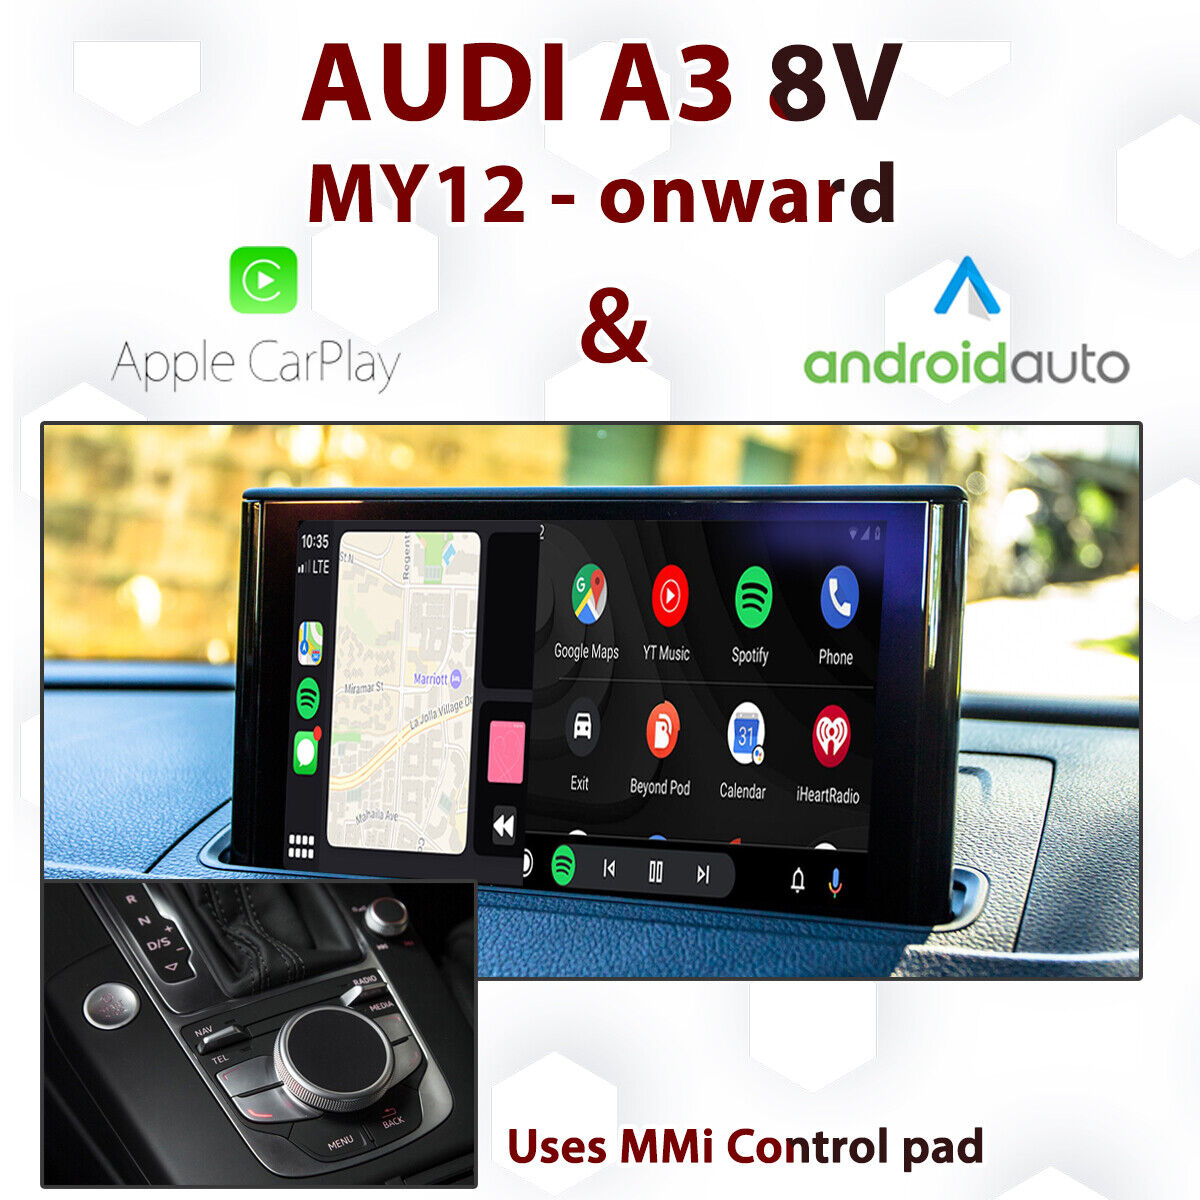 AUDI A3 8V - 3G MMI / MIB Integrated Apple CarPlay & Android Auto